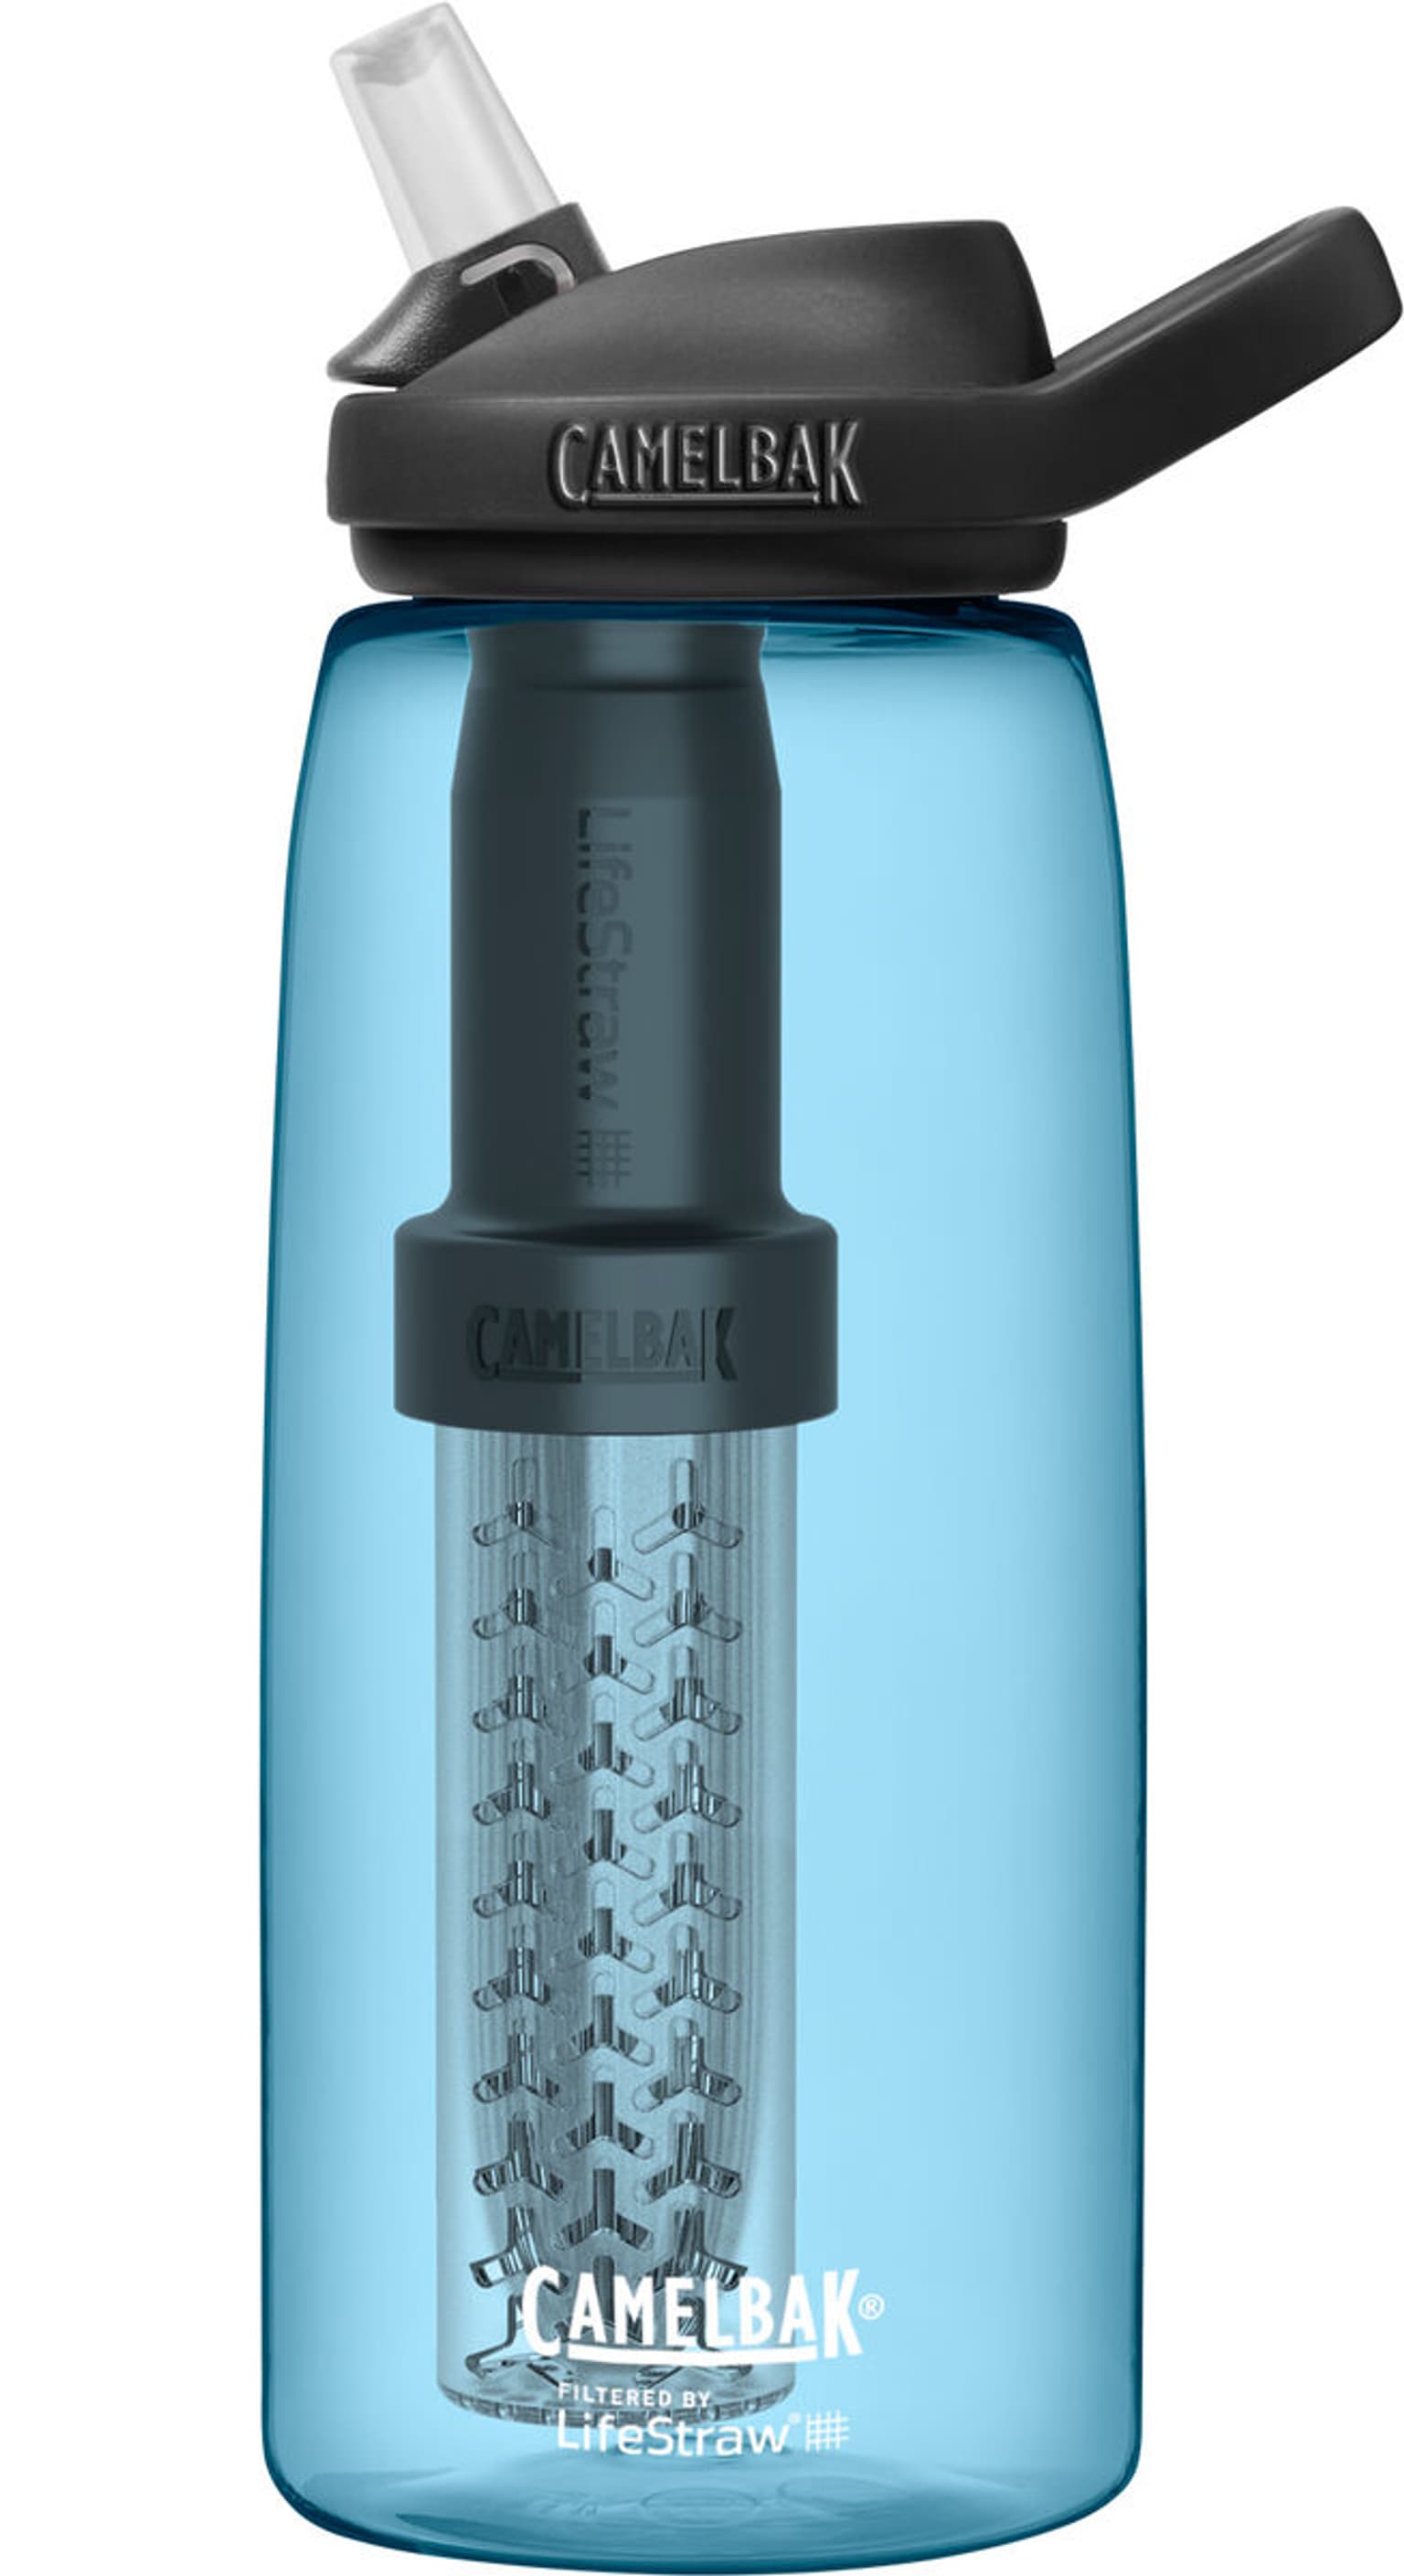 Camelbak Camelbak Eddy+ Bottle Lifestraw 1.0l Wasserfilter blau 1